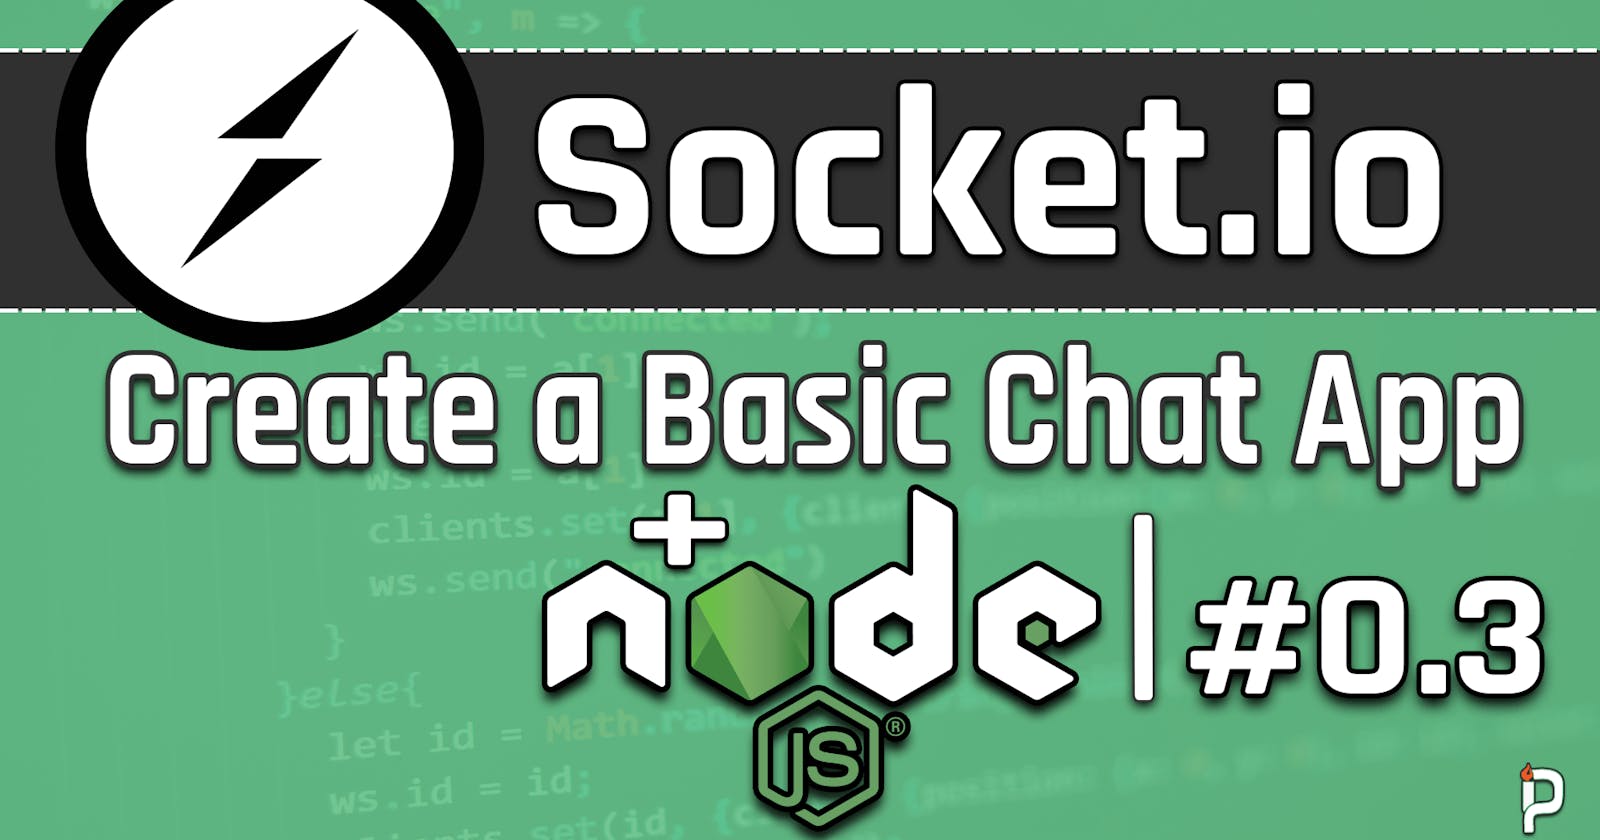 Node.js Socket.io Make a Basic Chat Application (Native JS) 03